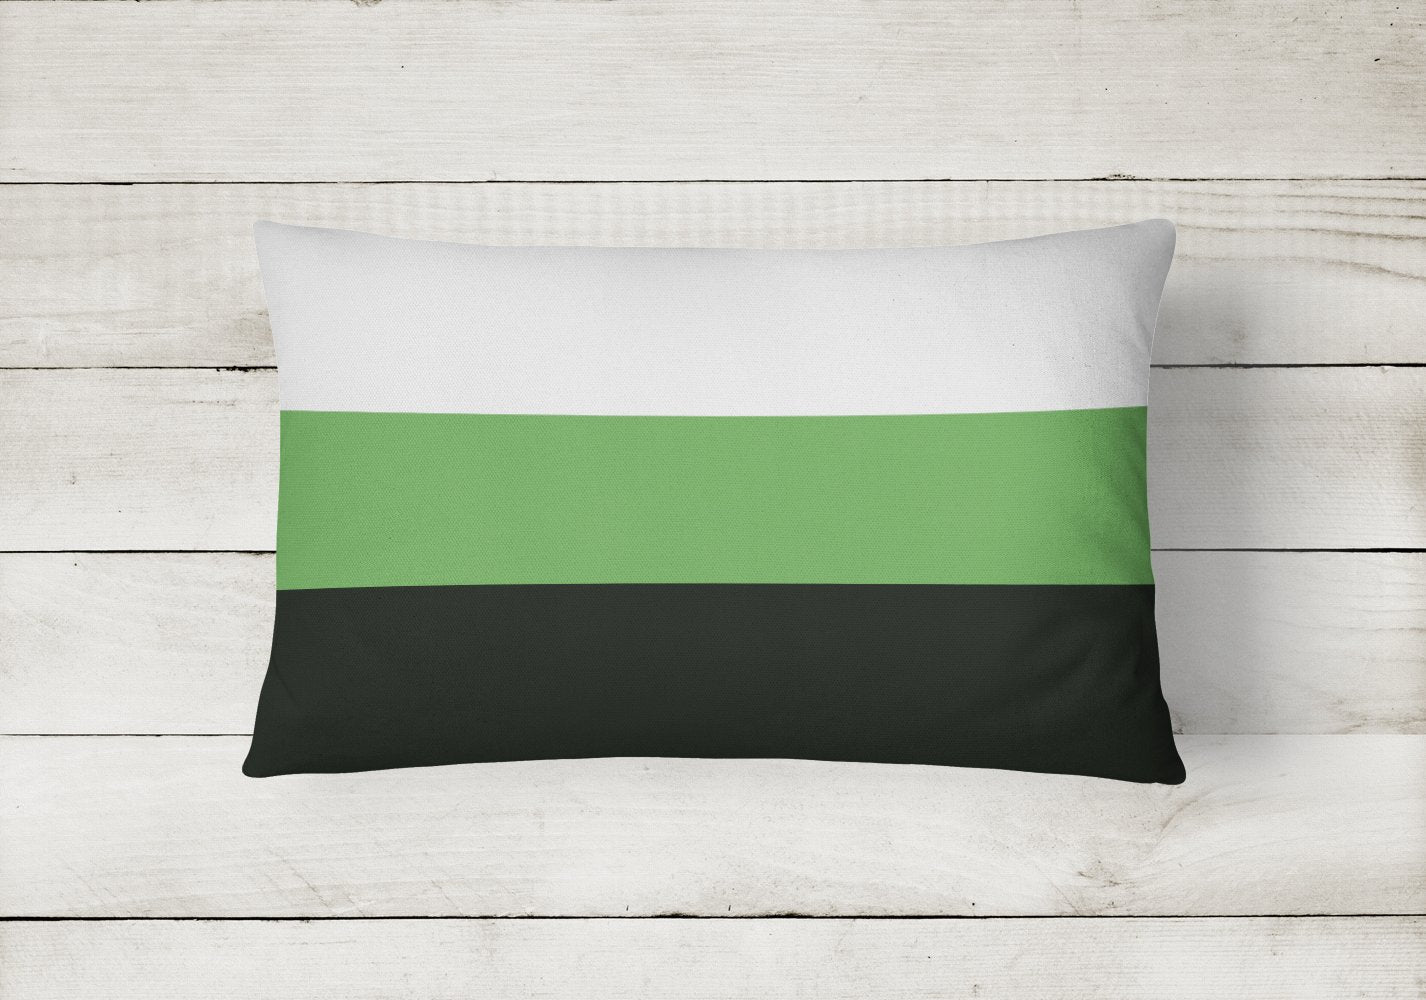 Buy this Neutrois Pride Canvas Fabric Decorative Pillow